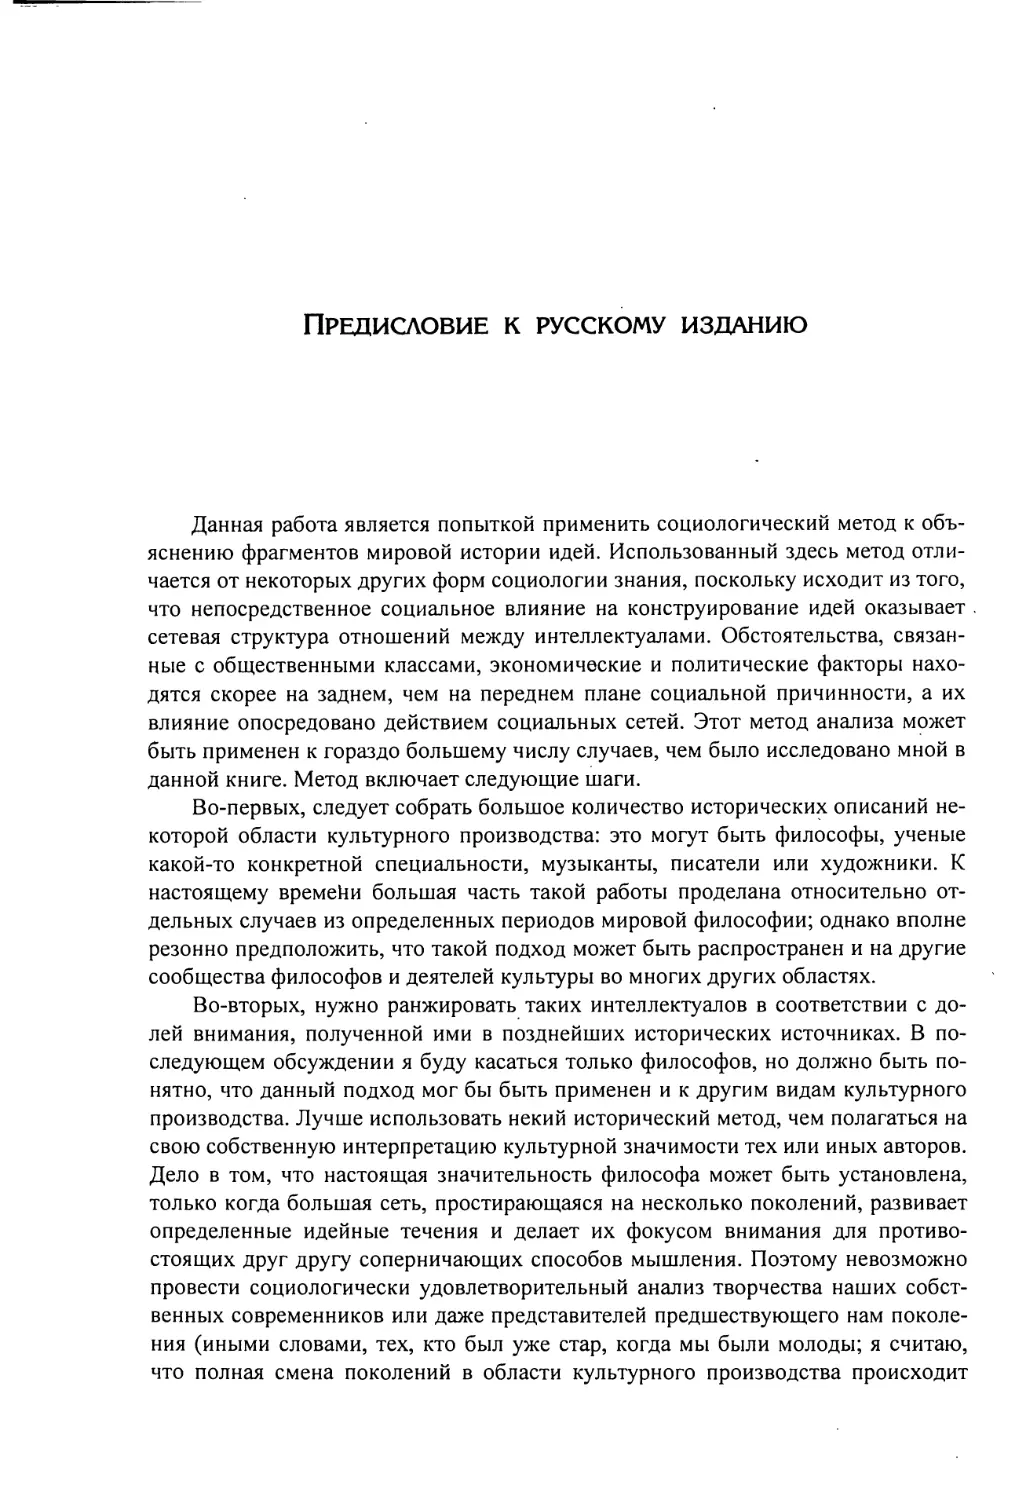 Предисловие к русскому изданию [32]